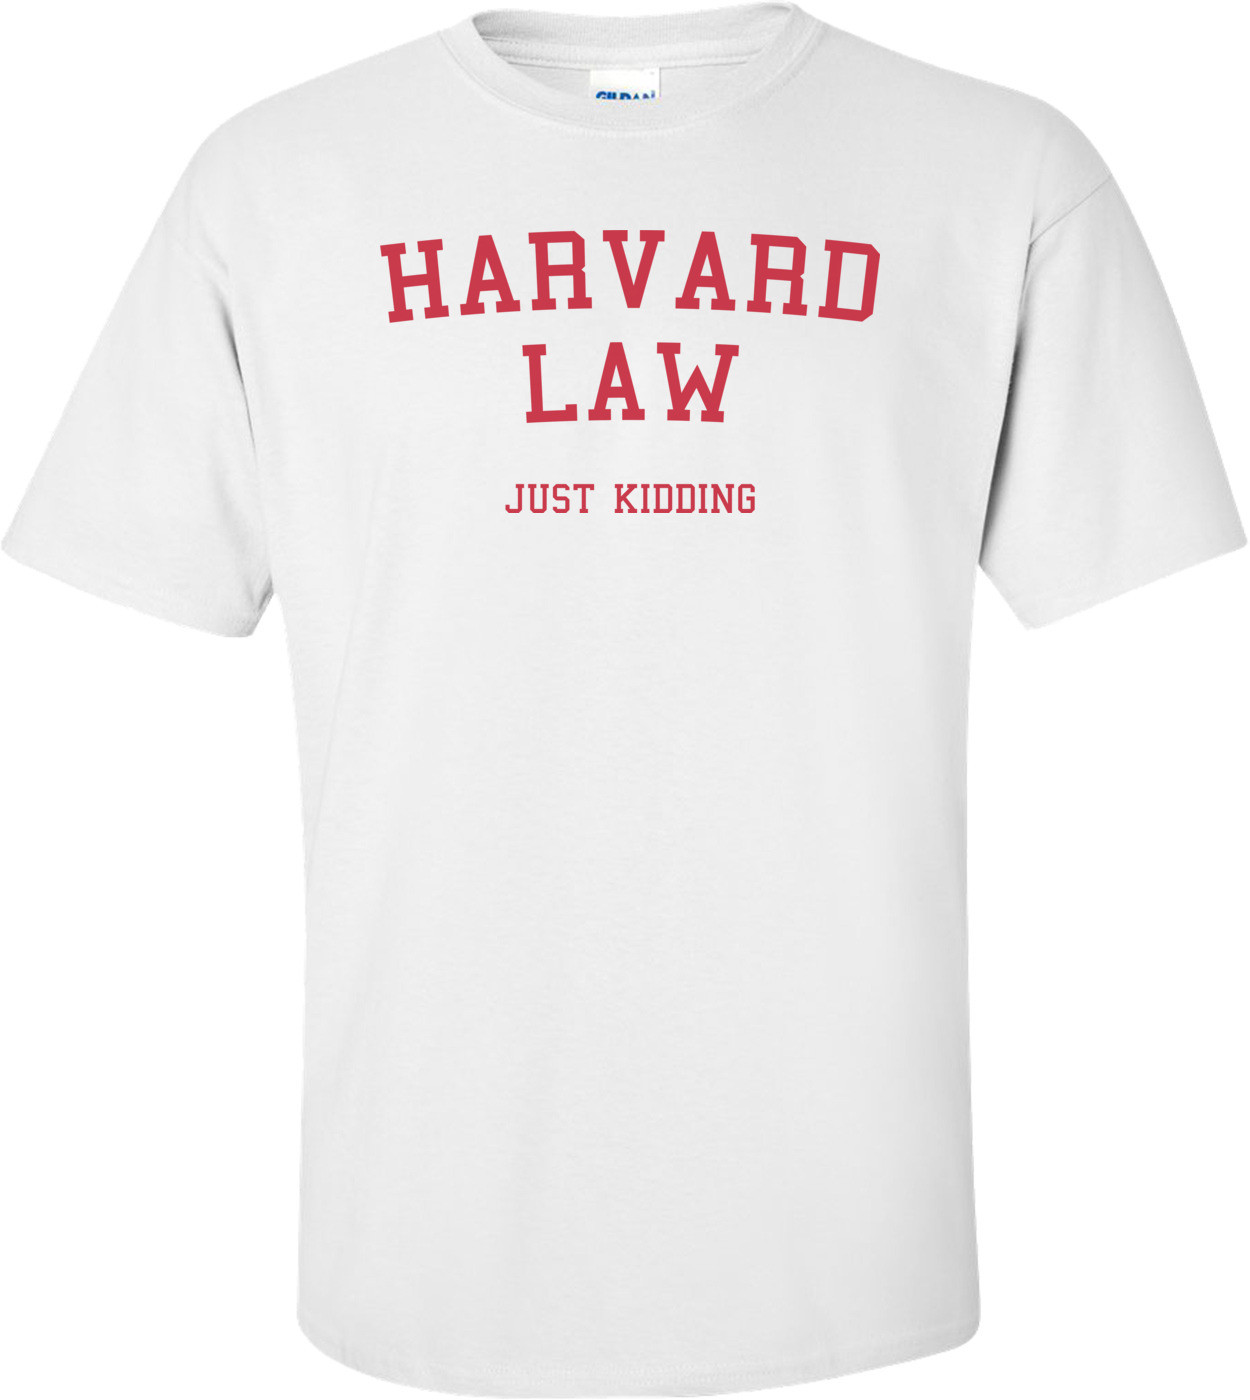 Harvard Law (Just Kidding) Shirt